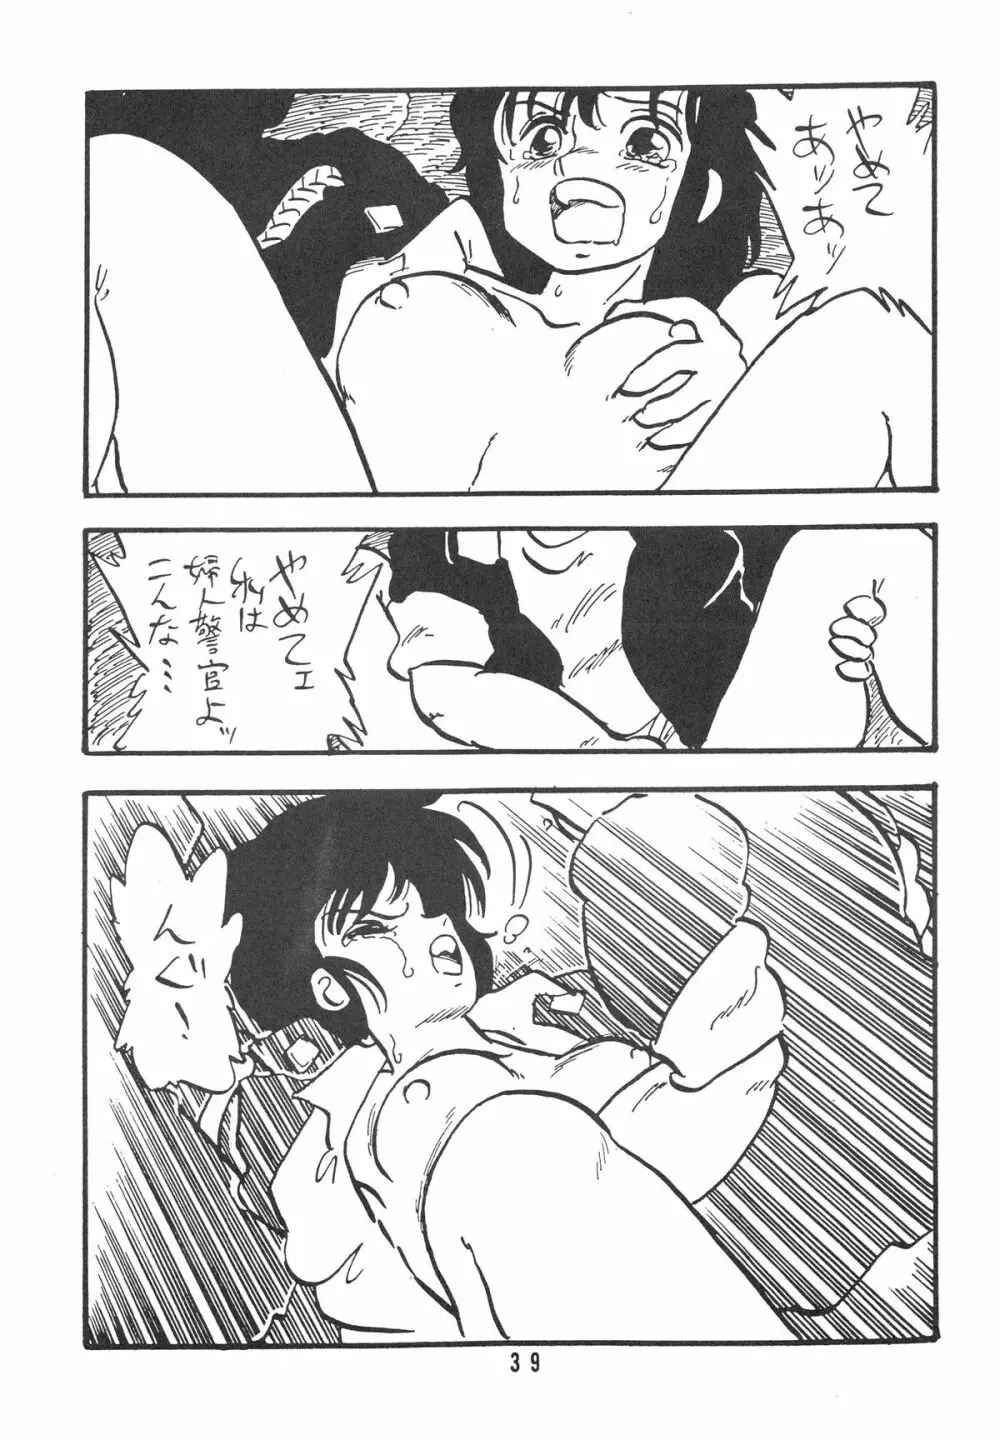 HANAKO 花子 - page39